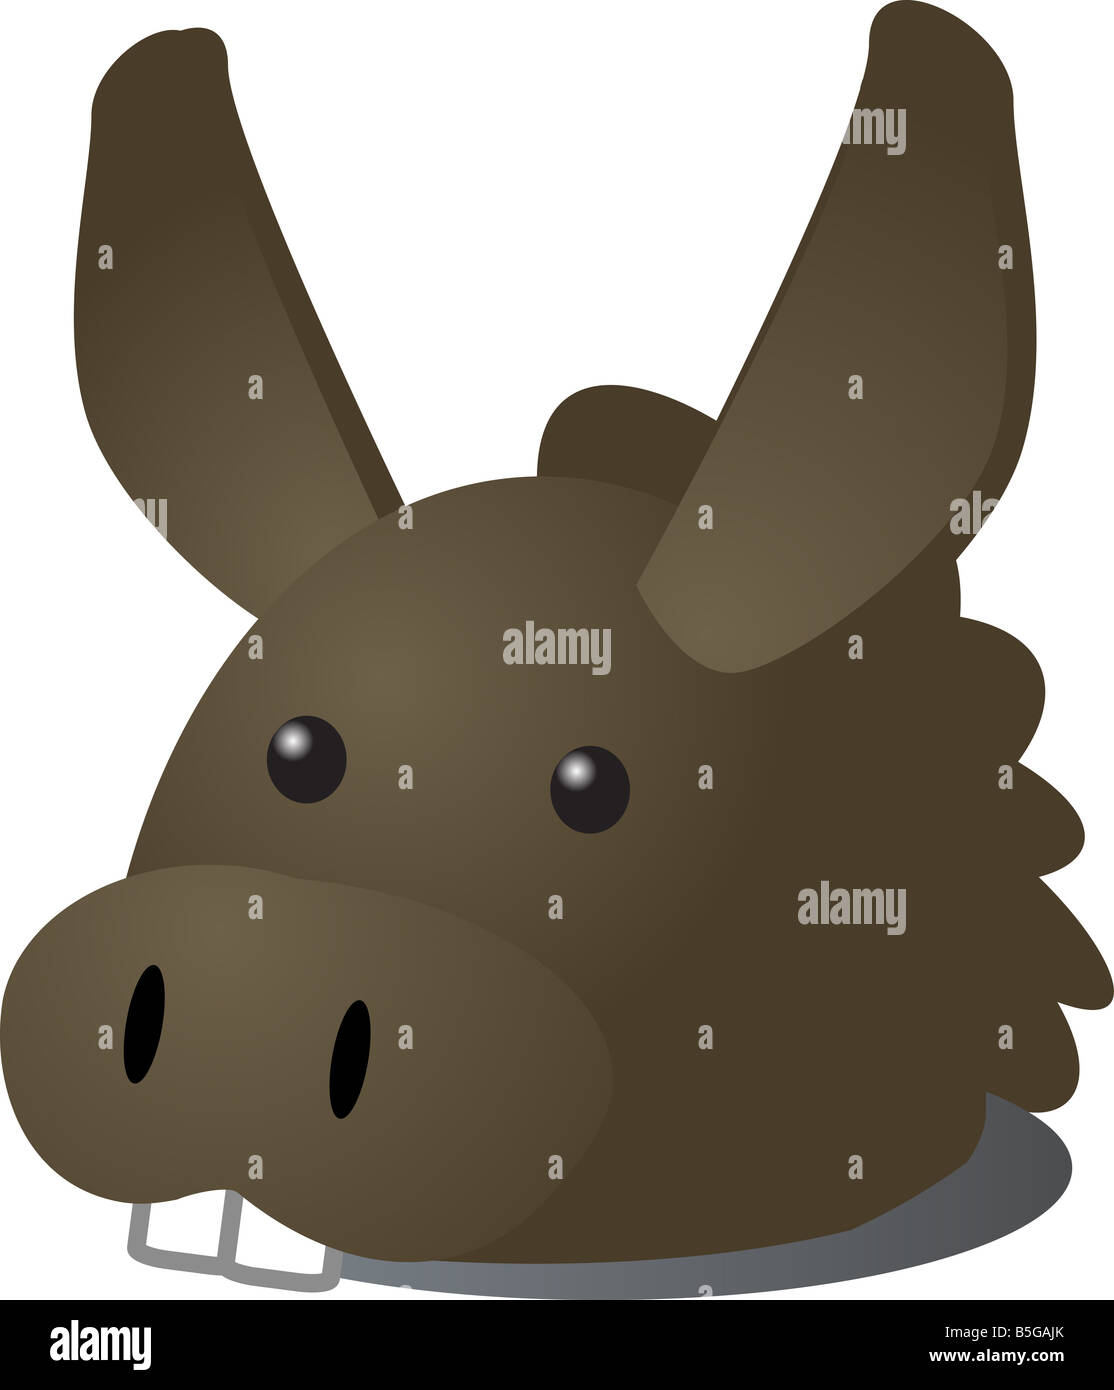 Cute cartoon illustration of a donkey s head Stock Photo - Alamy